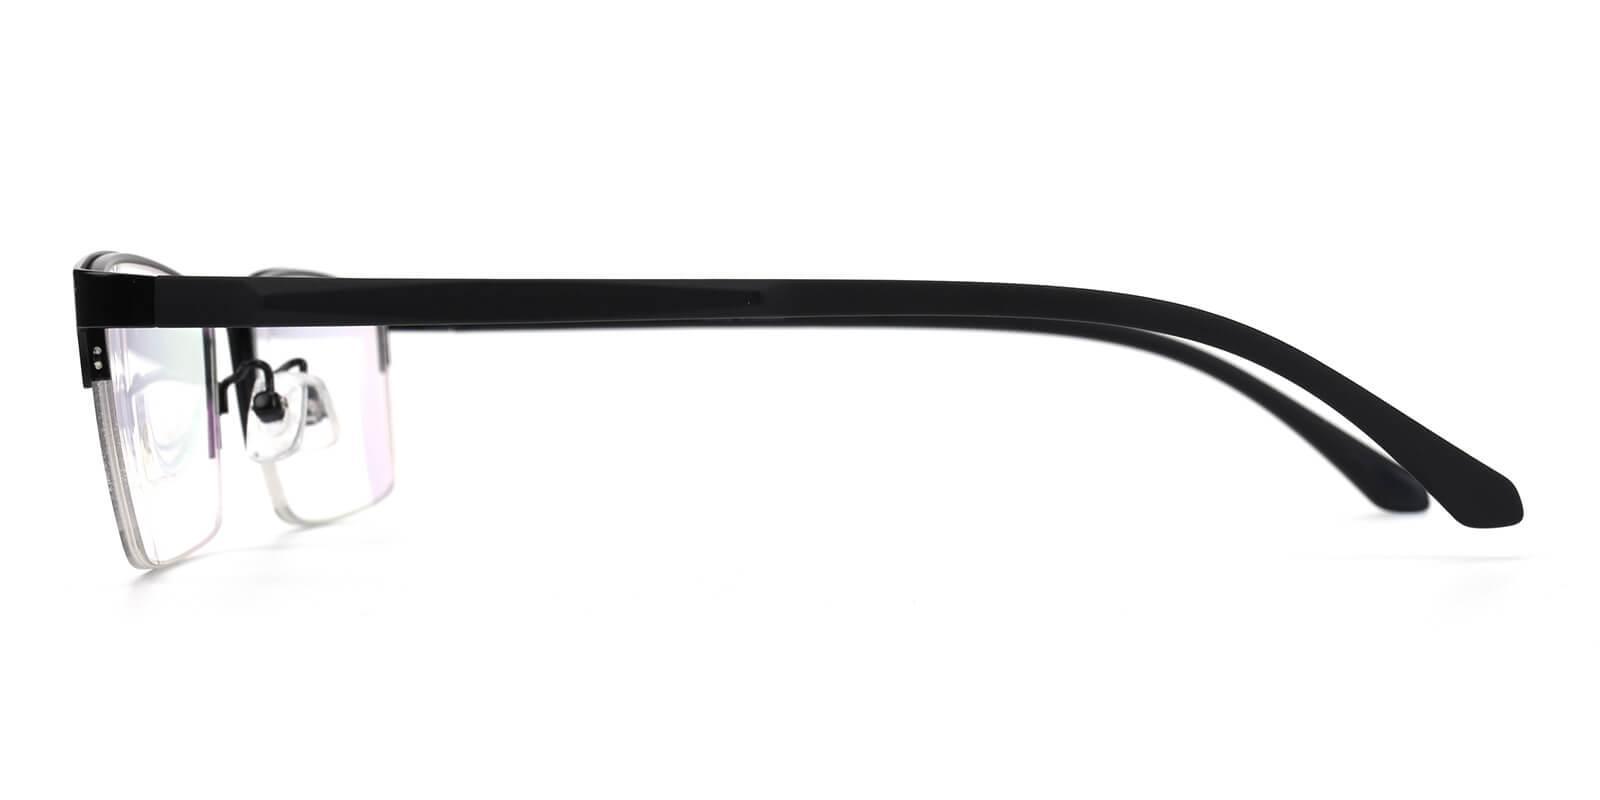 Melody Black Metal Eyeglasses , NosePads , SpringHinges Frames from ABBE Glasses